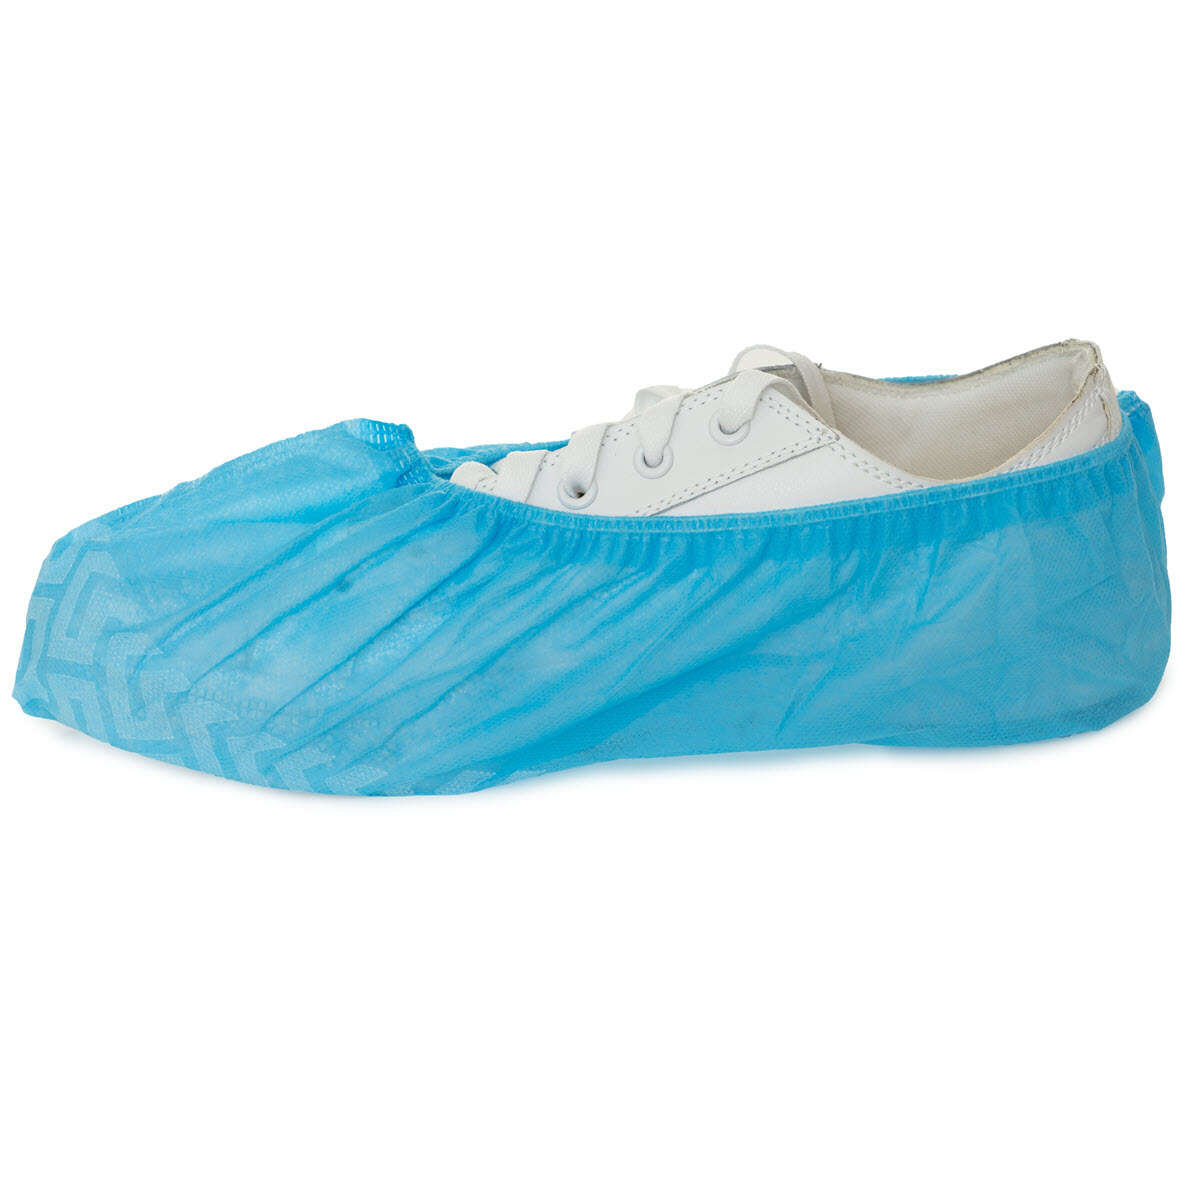 Polypropylene (V3100) Blue Anti-Skid Shoe Covers, Universal Size, 150 pair